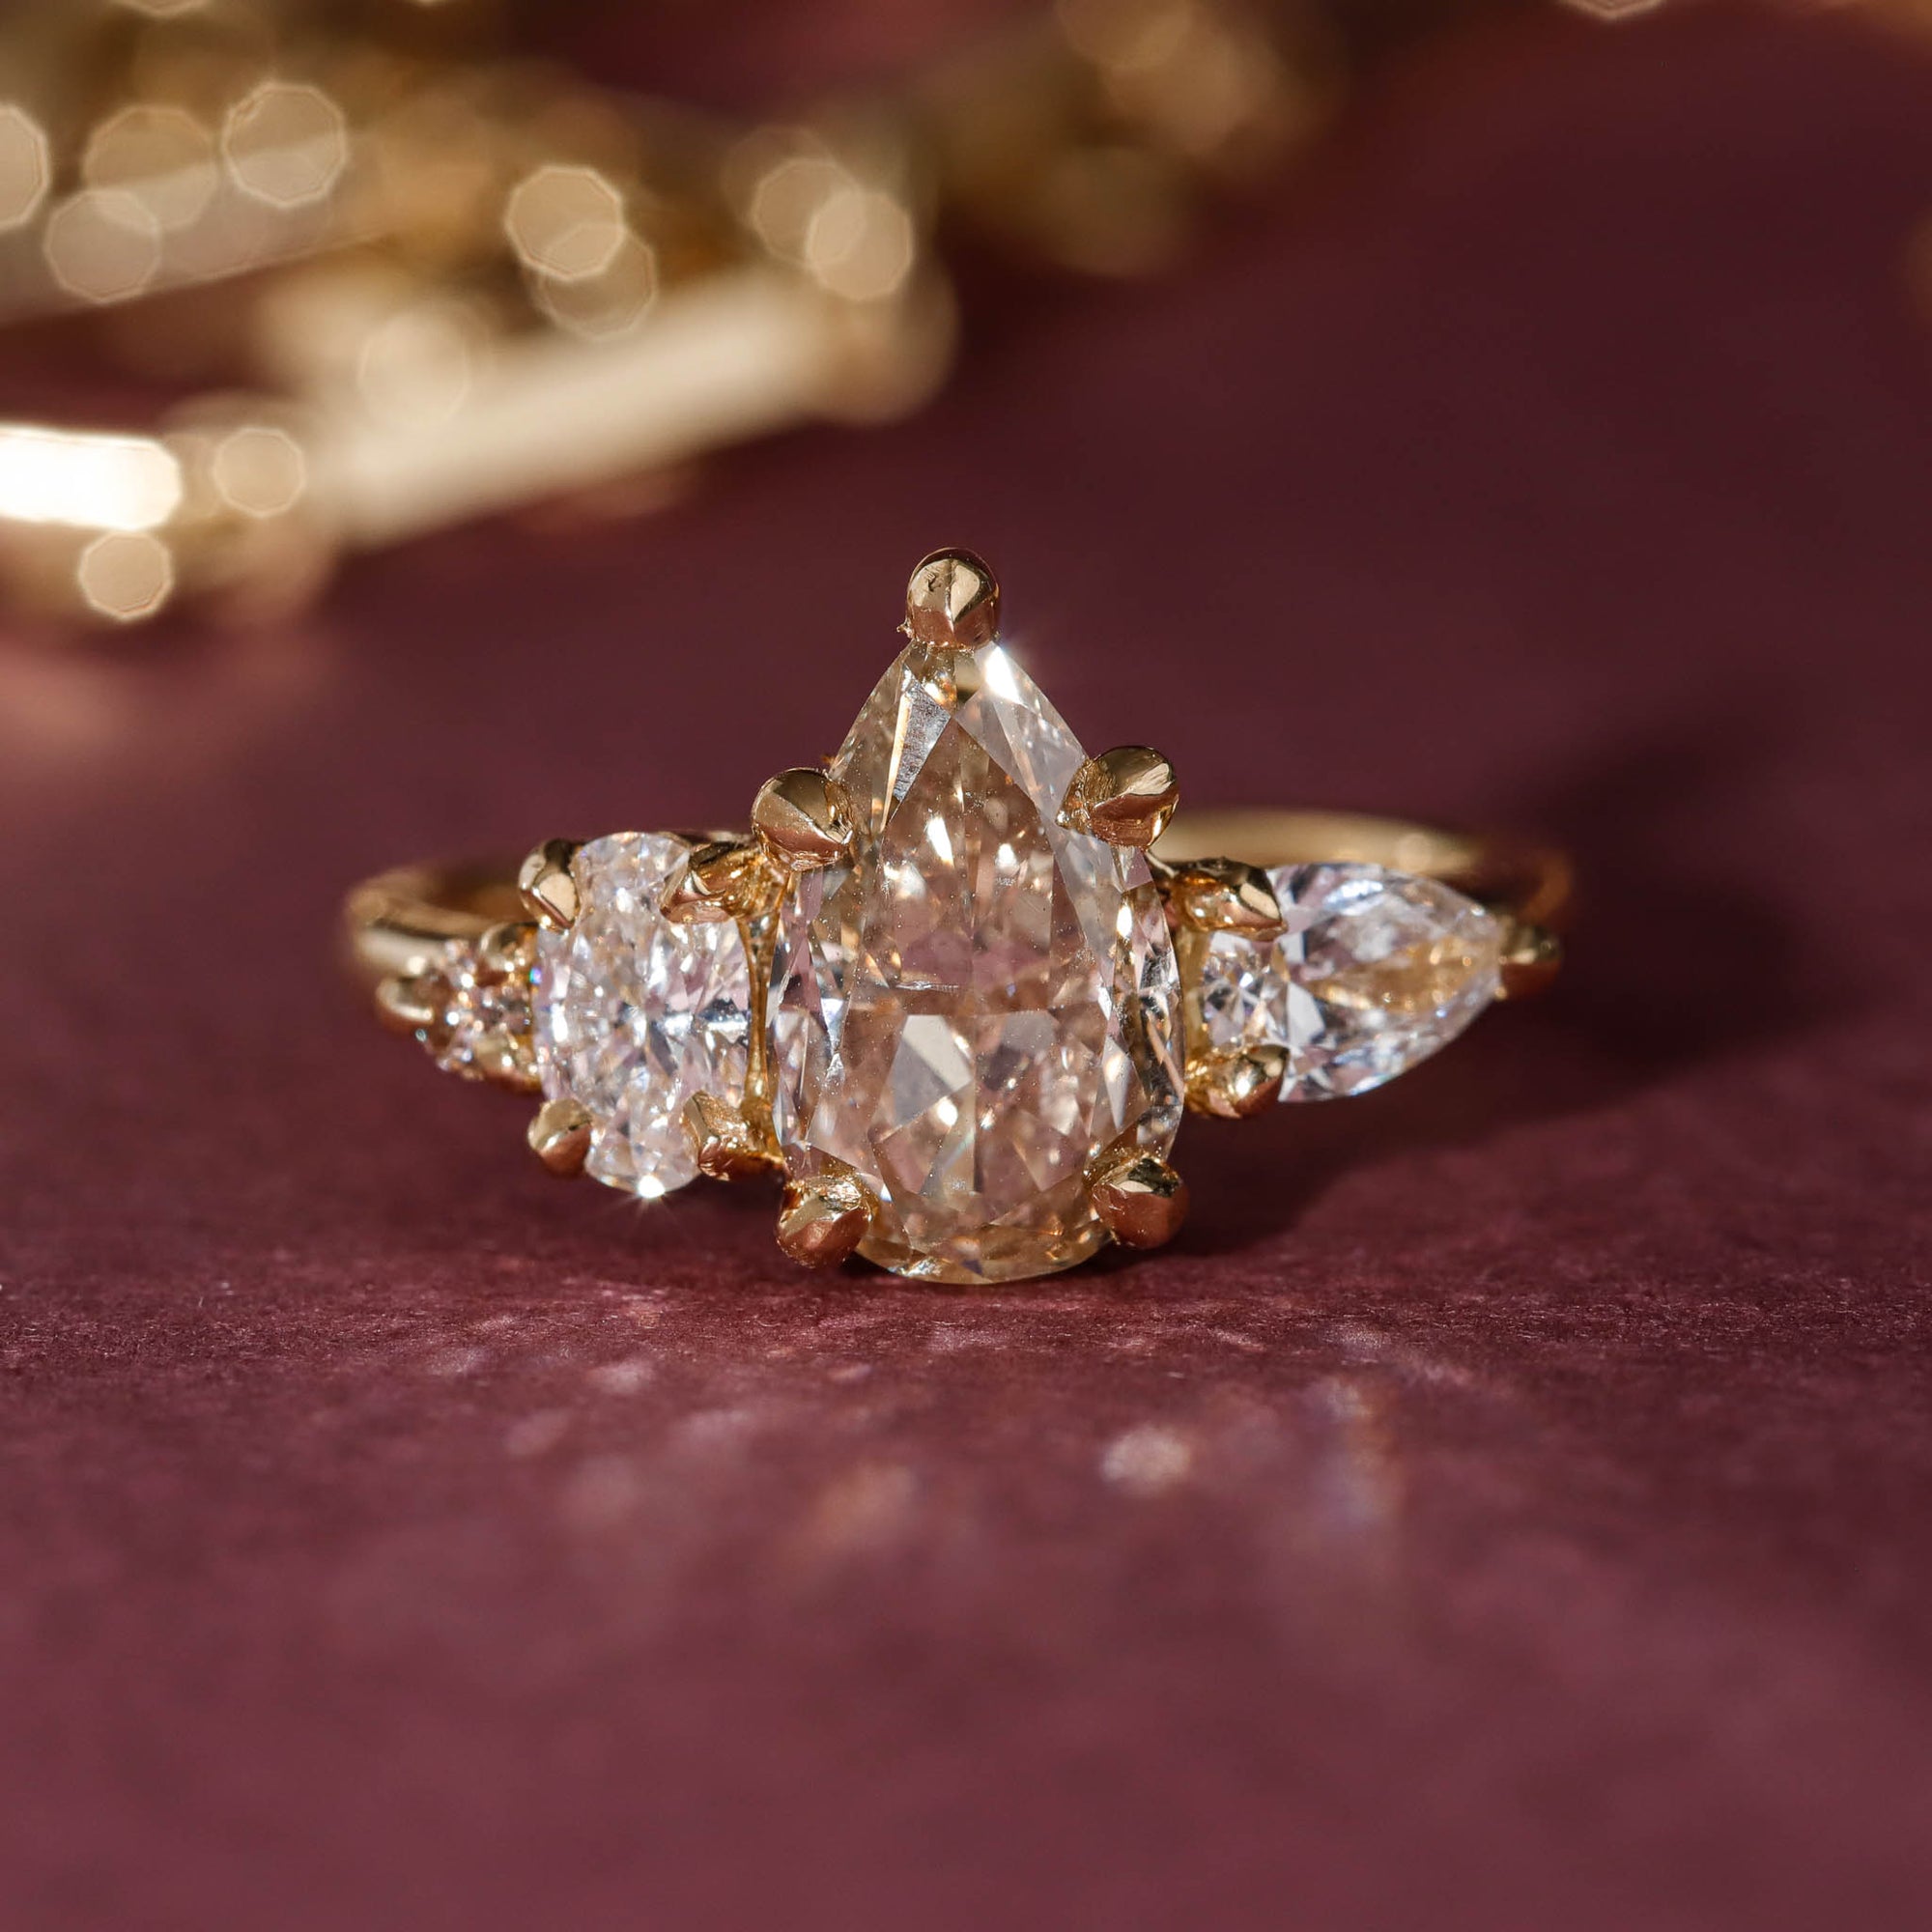 Cascade Diamond Ring